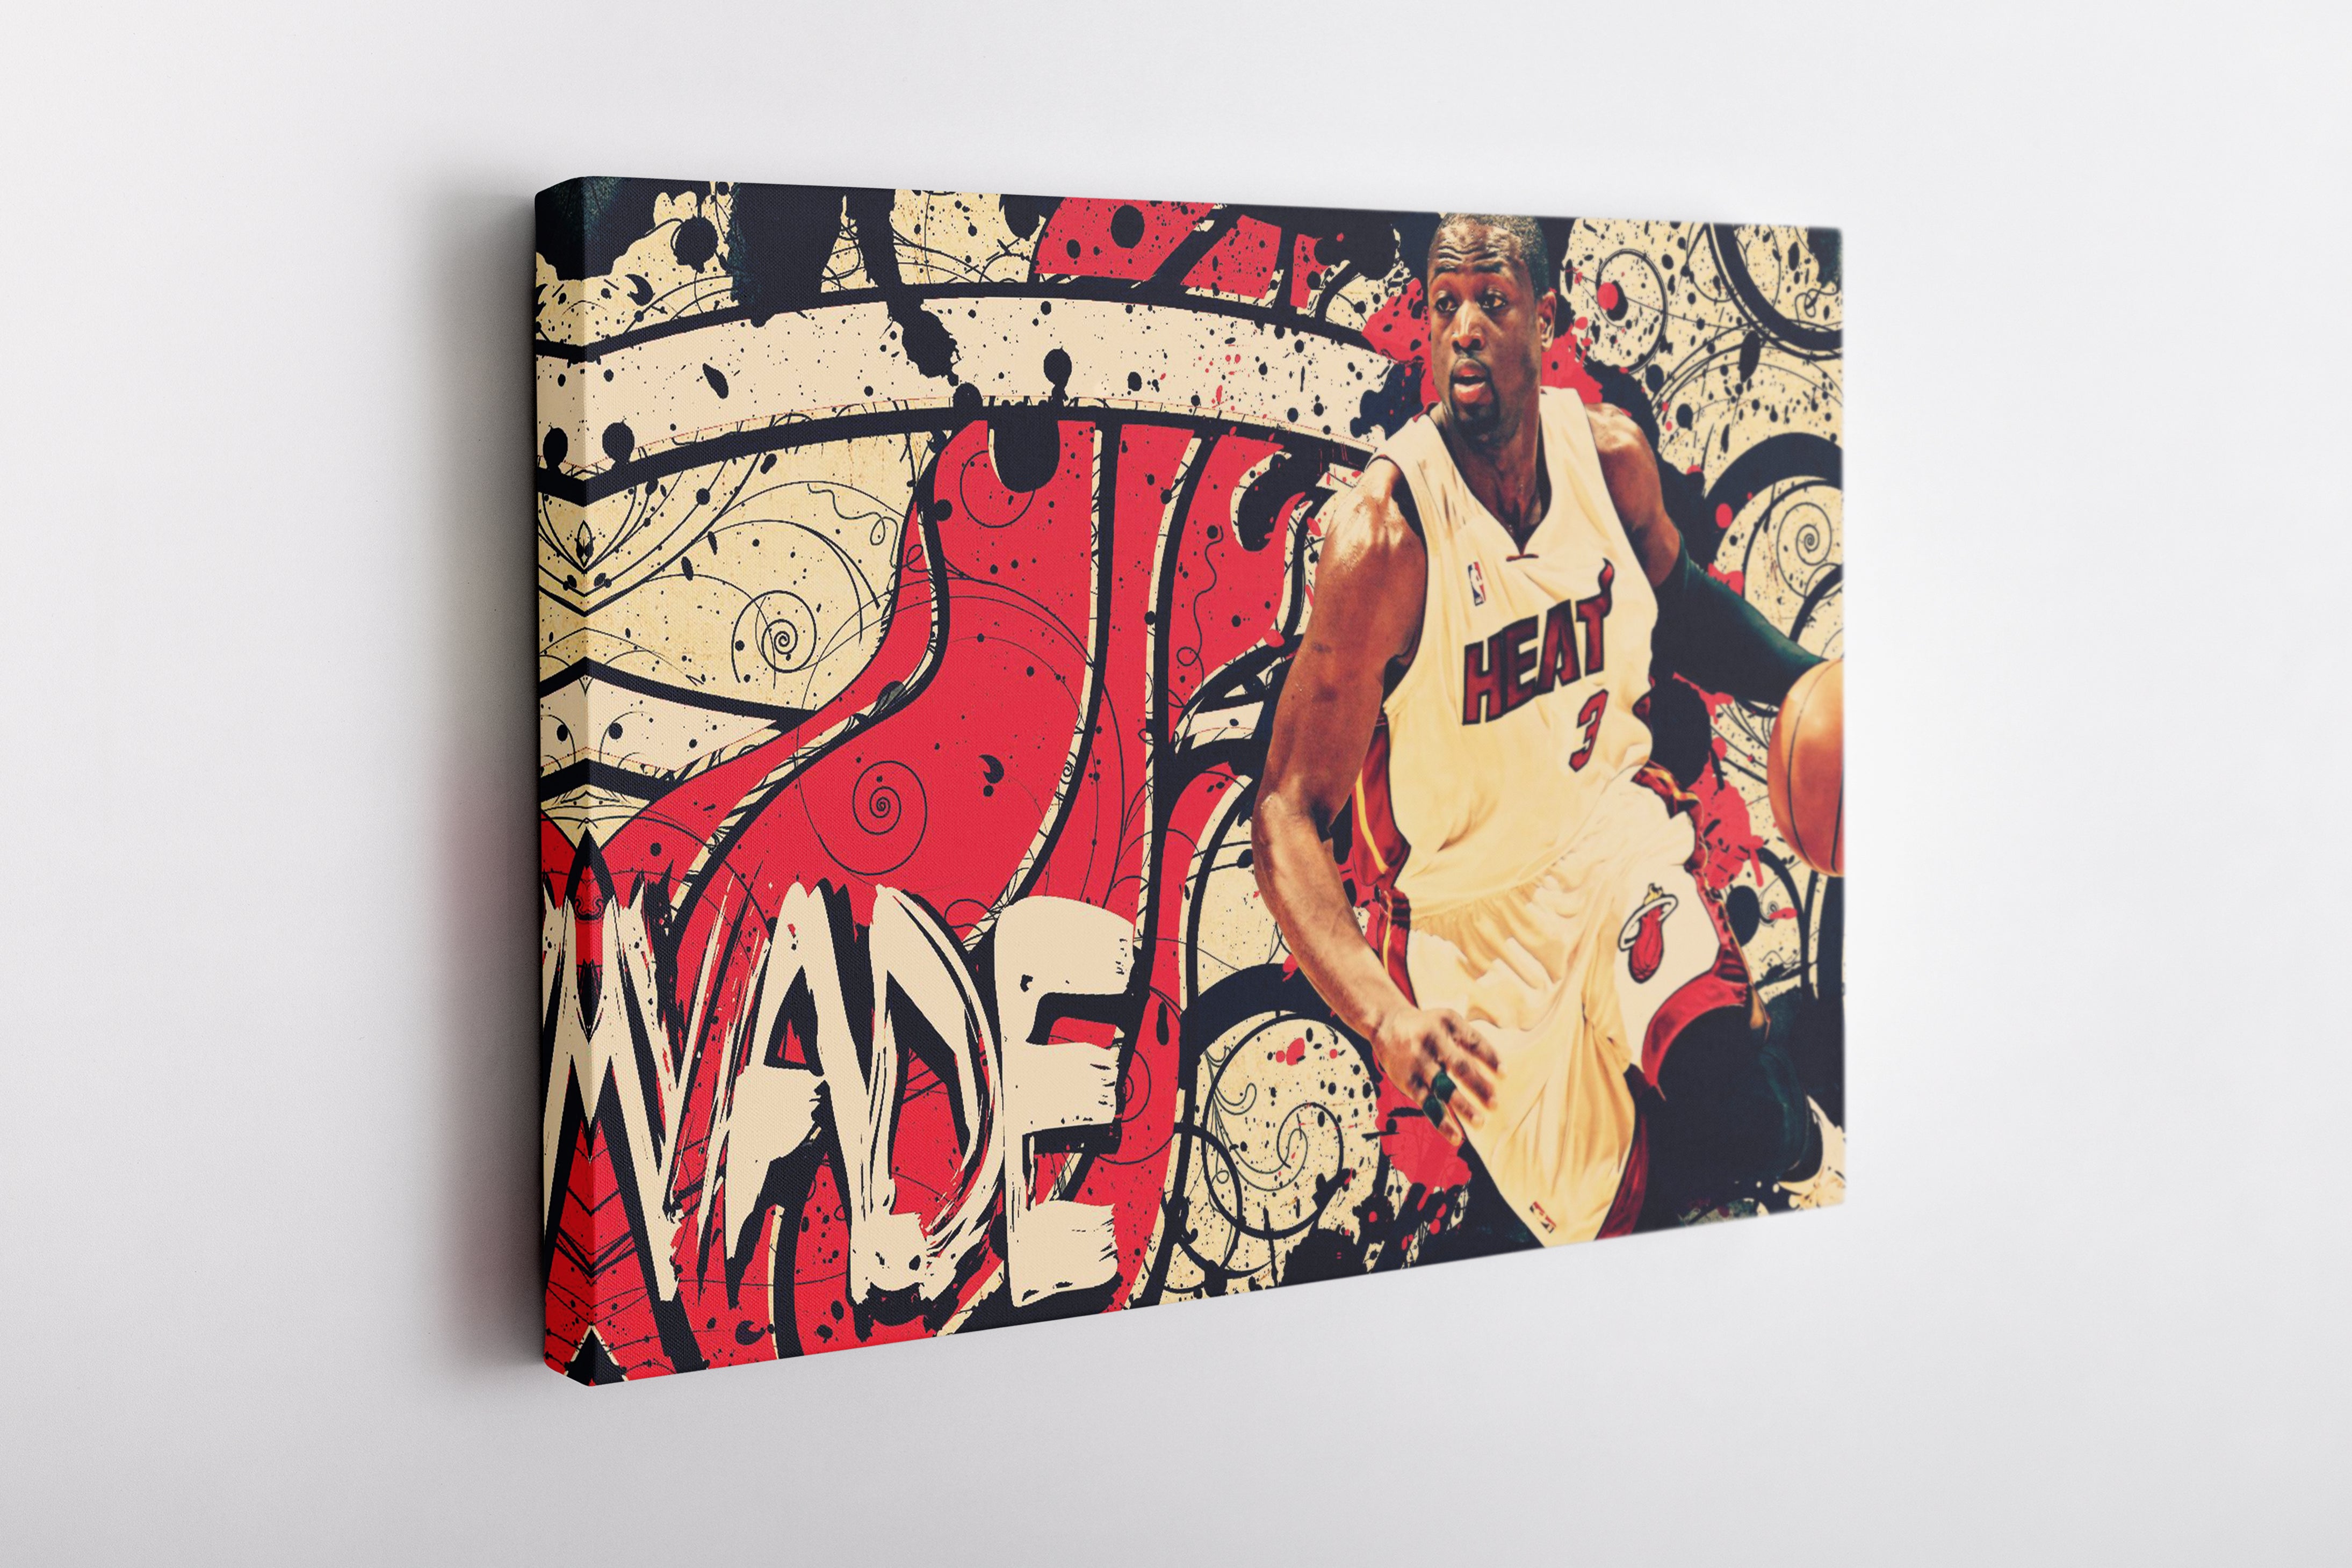  MW MERWEZI Dwyane Wade Jersey Art Miami Heat NBA Wall Art Home  Decor Hand Made Poster Canvas Print(Black Floating Frame, 12x18): Posters  & Prints